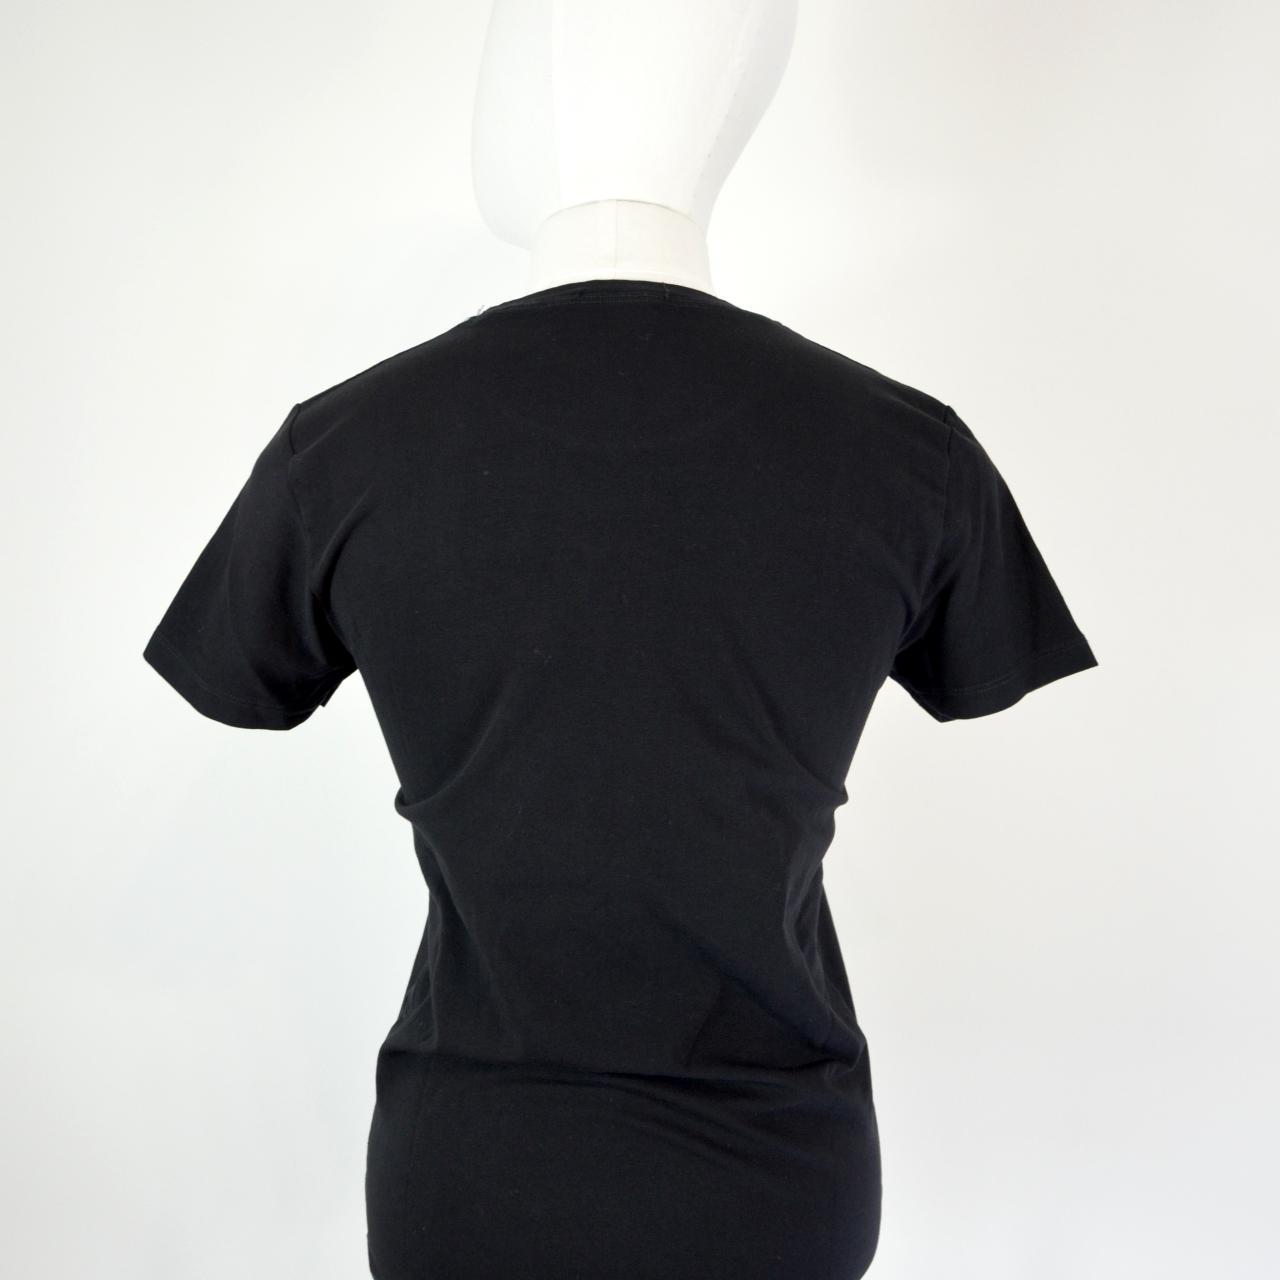 Raf Simons Women's Black T-shirt (2)